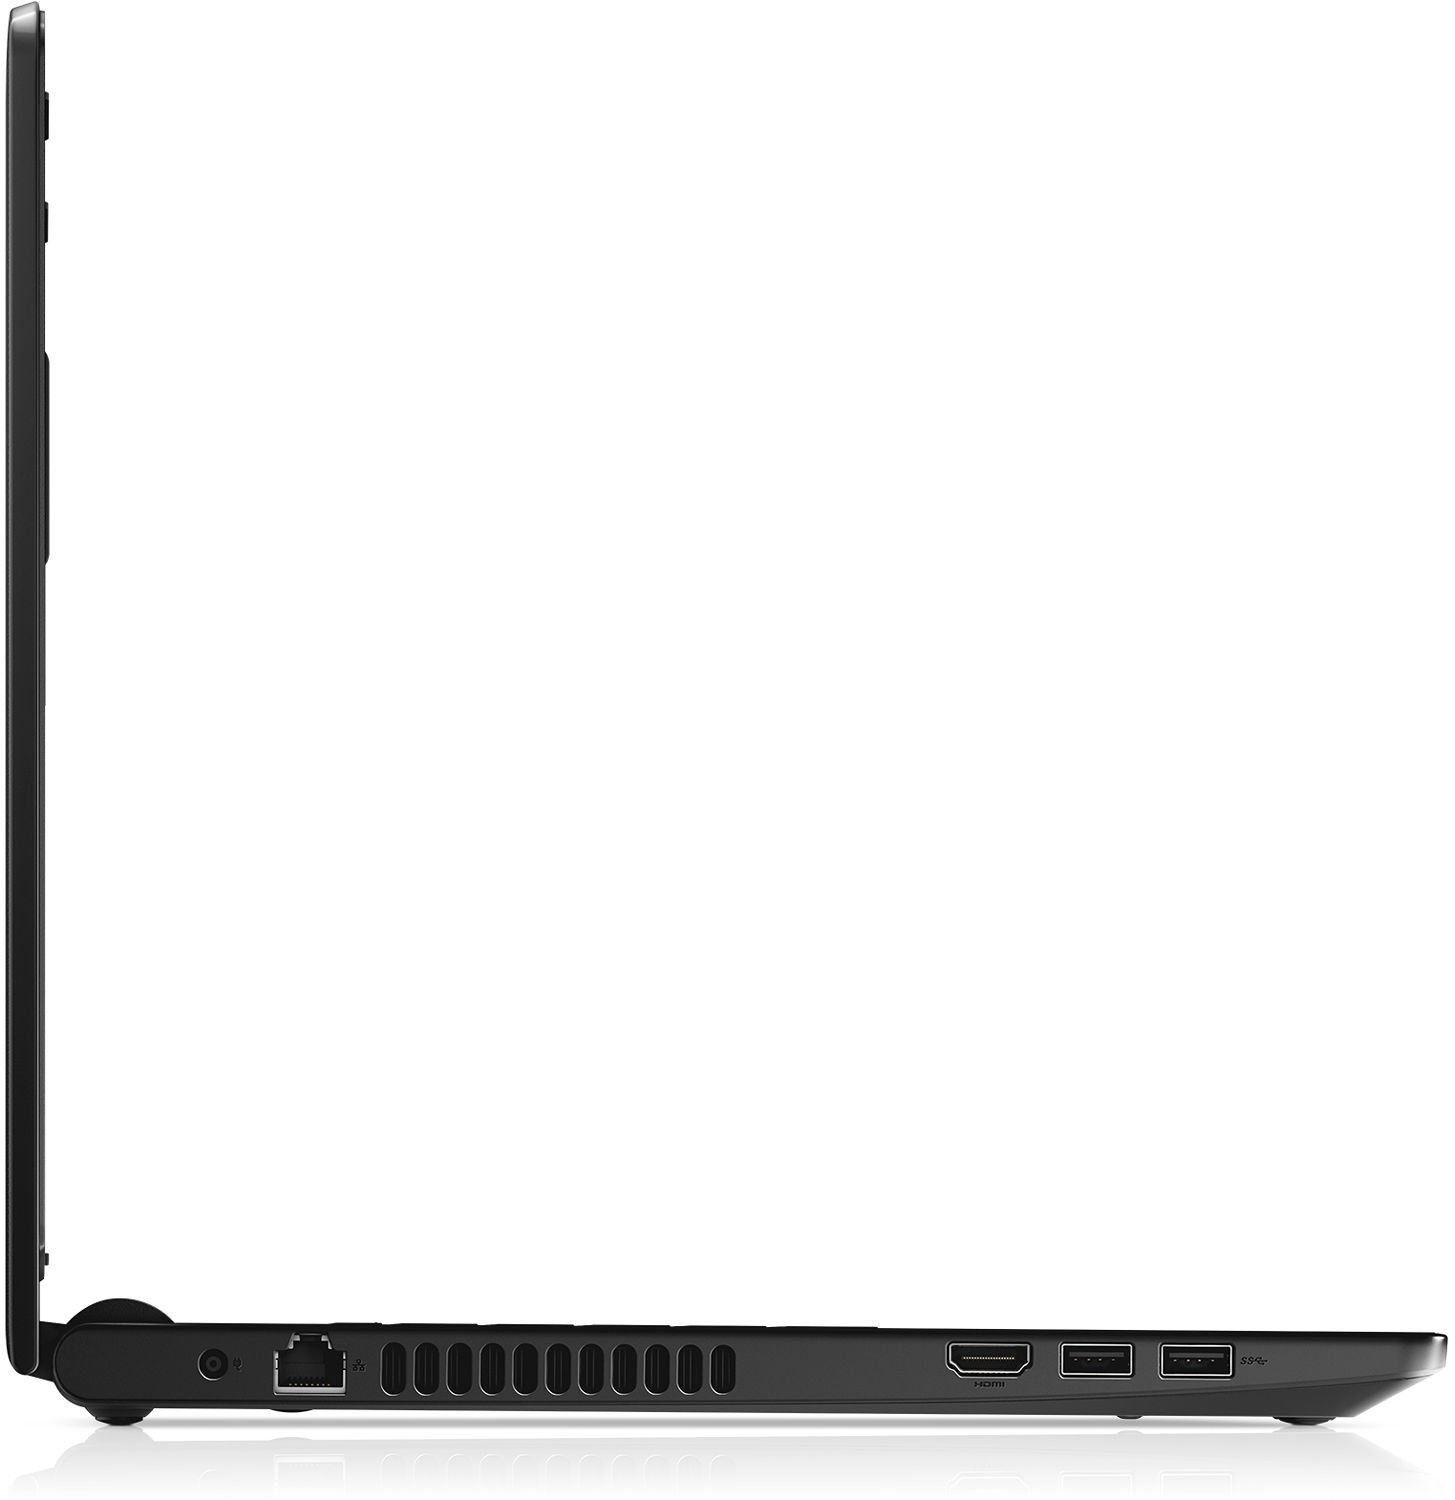 Купить Ноутбук Dell 3567